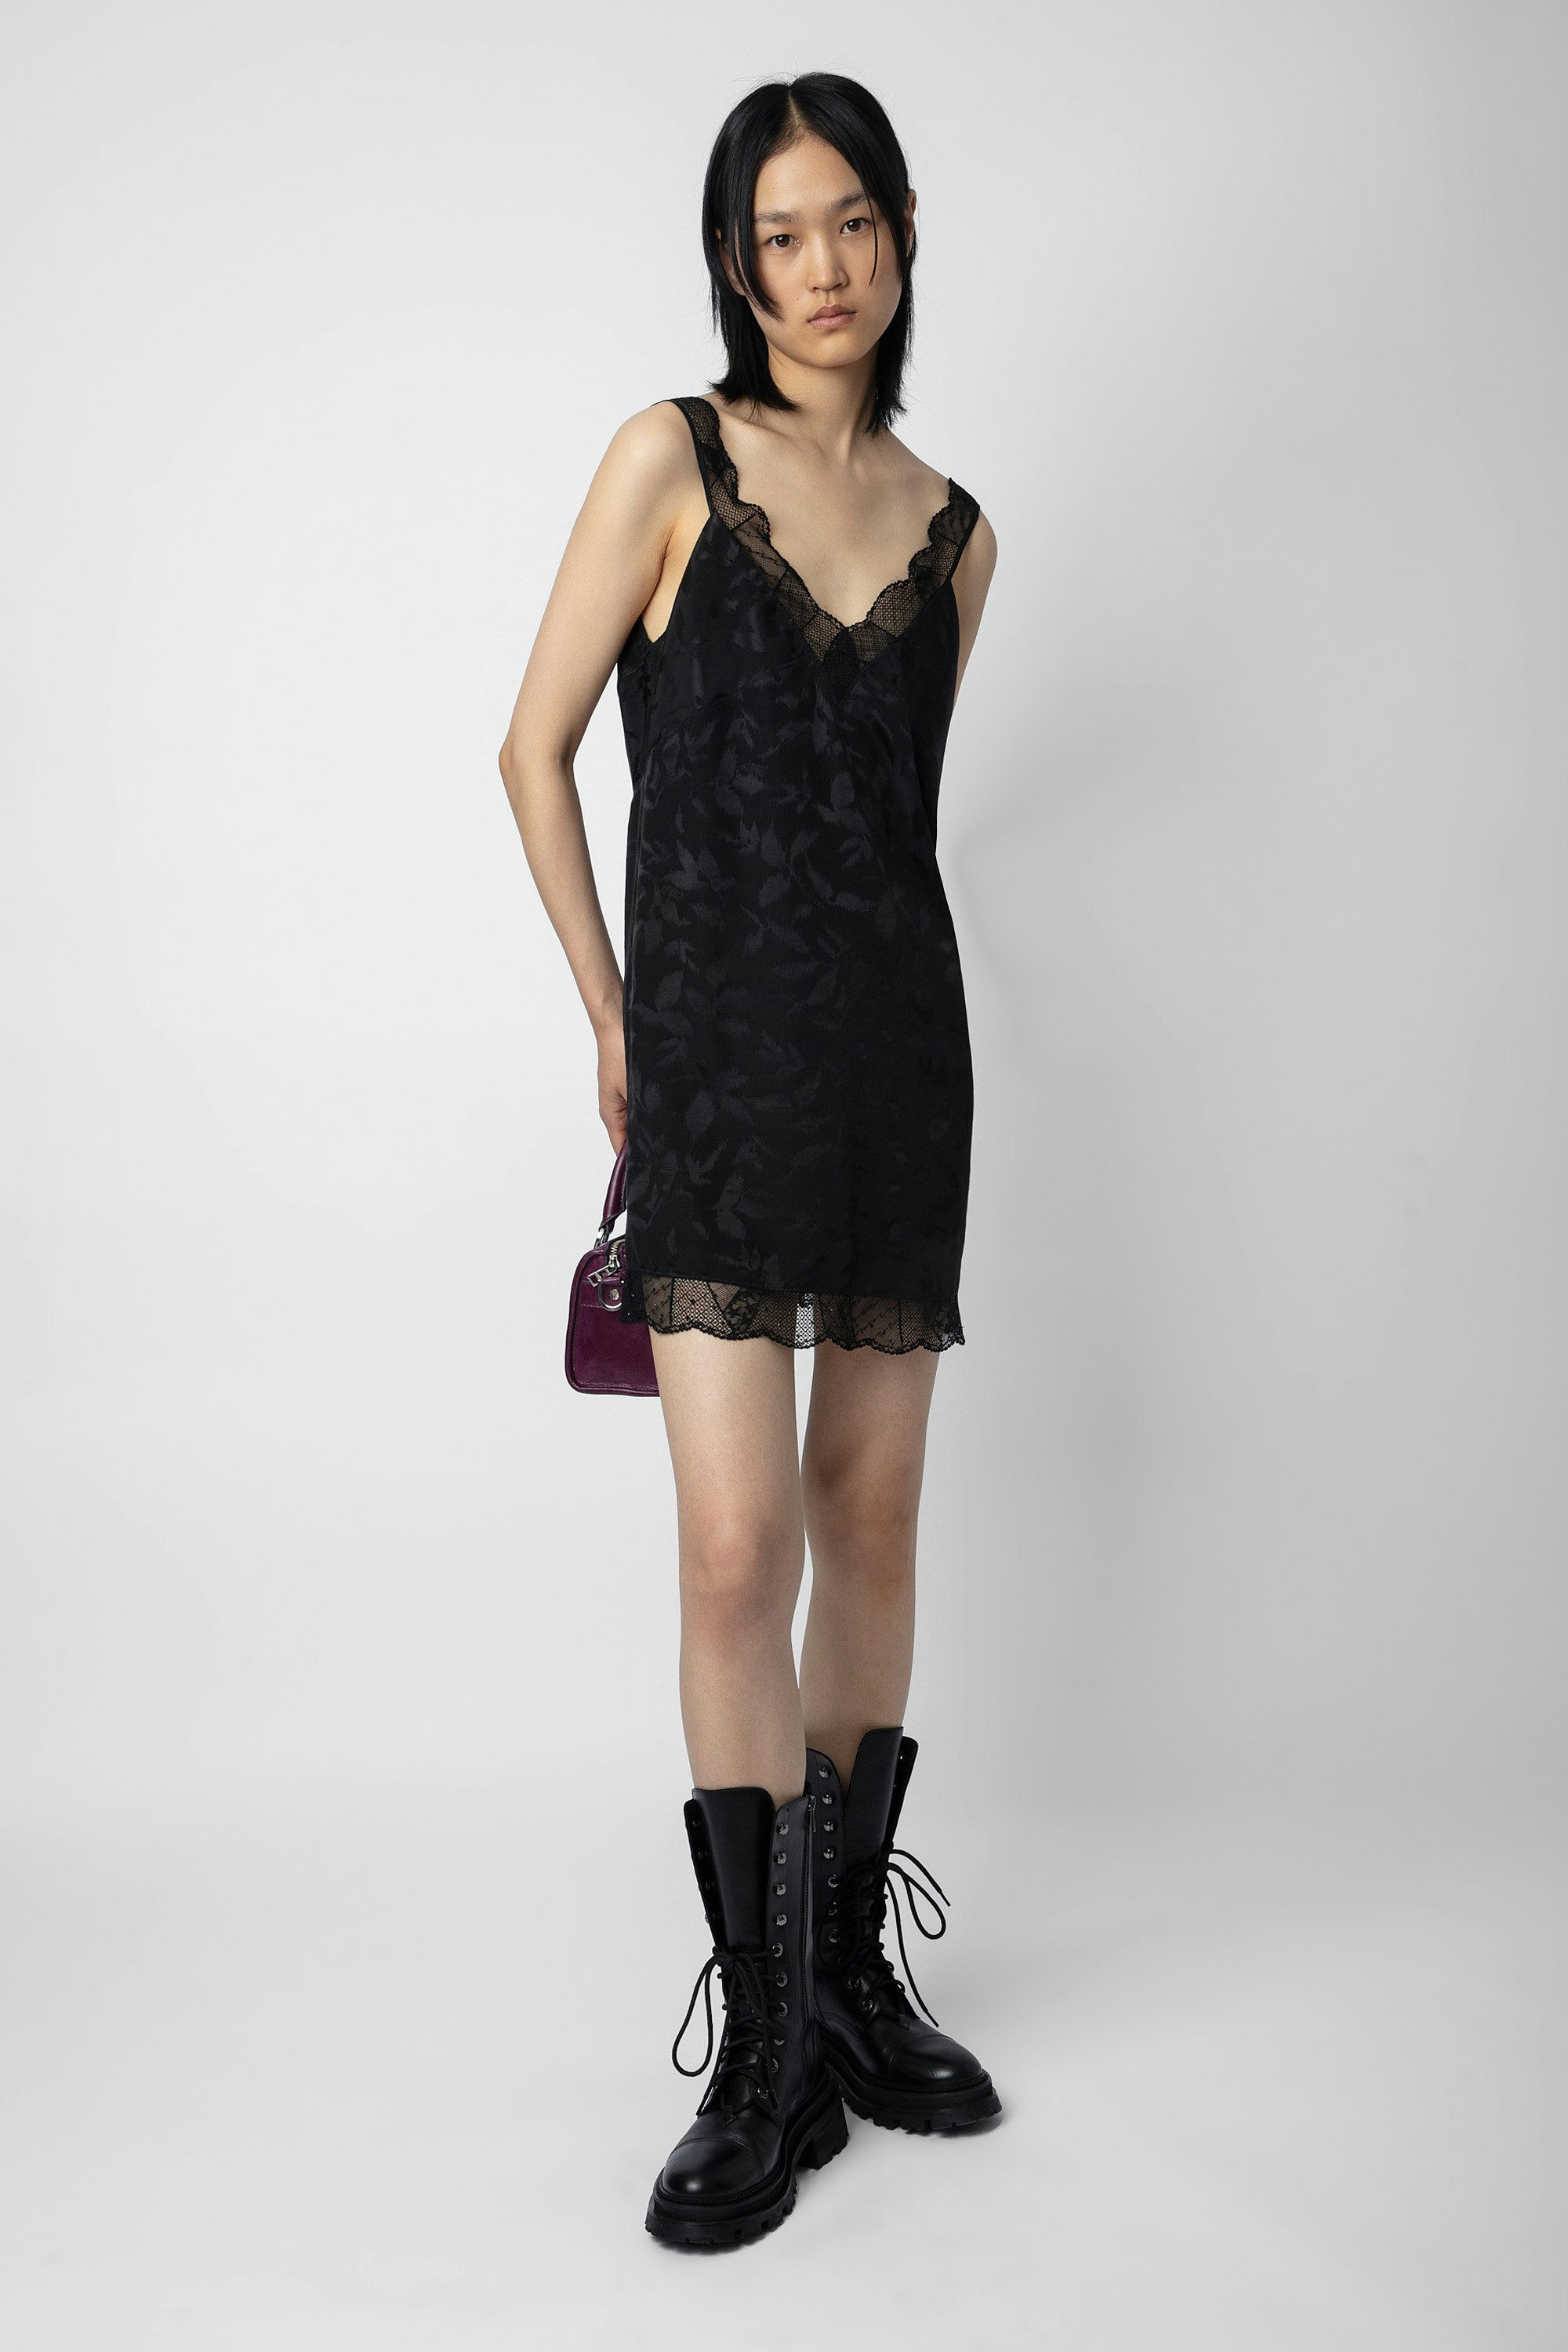 Renelle Silk Jacquard Dress - Women’s short black silk dress with jacquard floral print and lace trim.